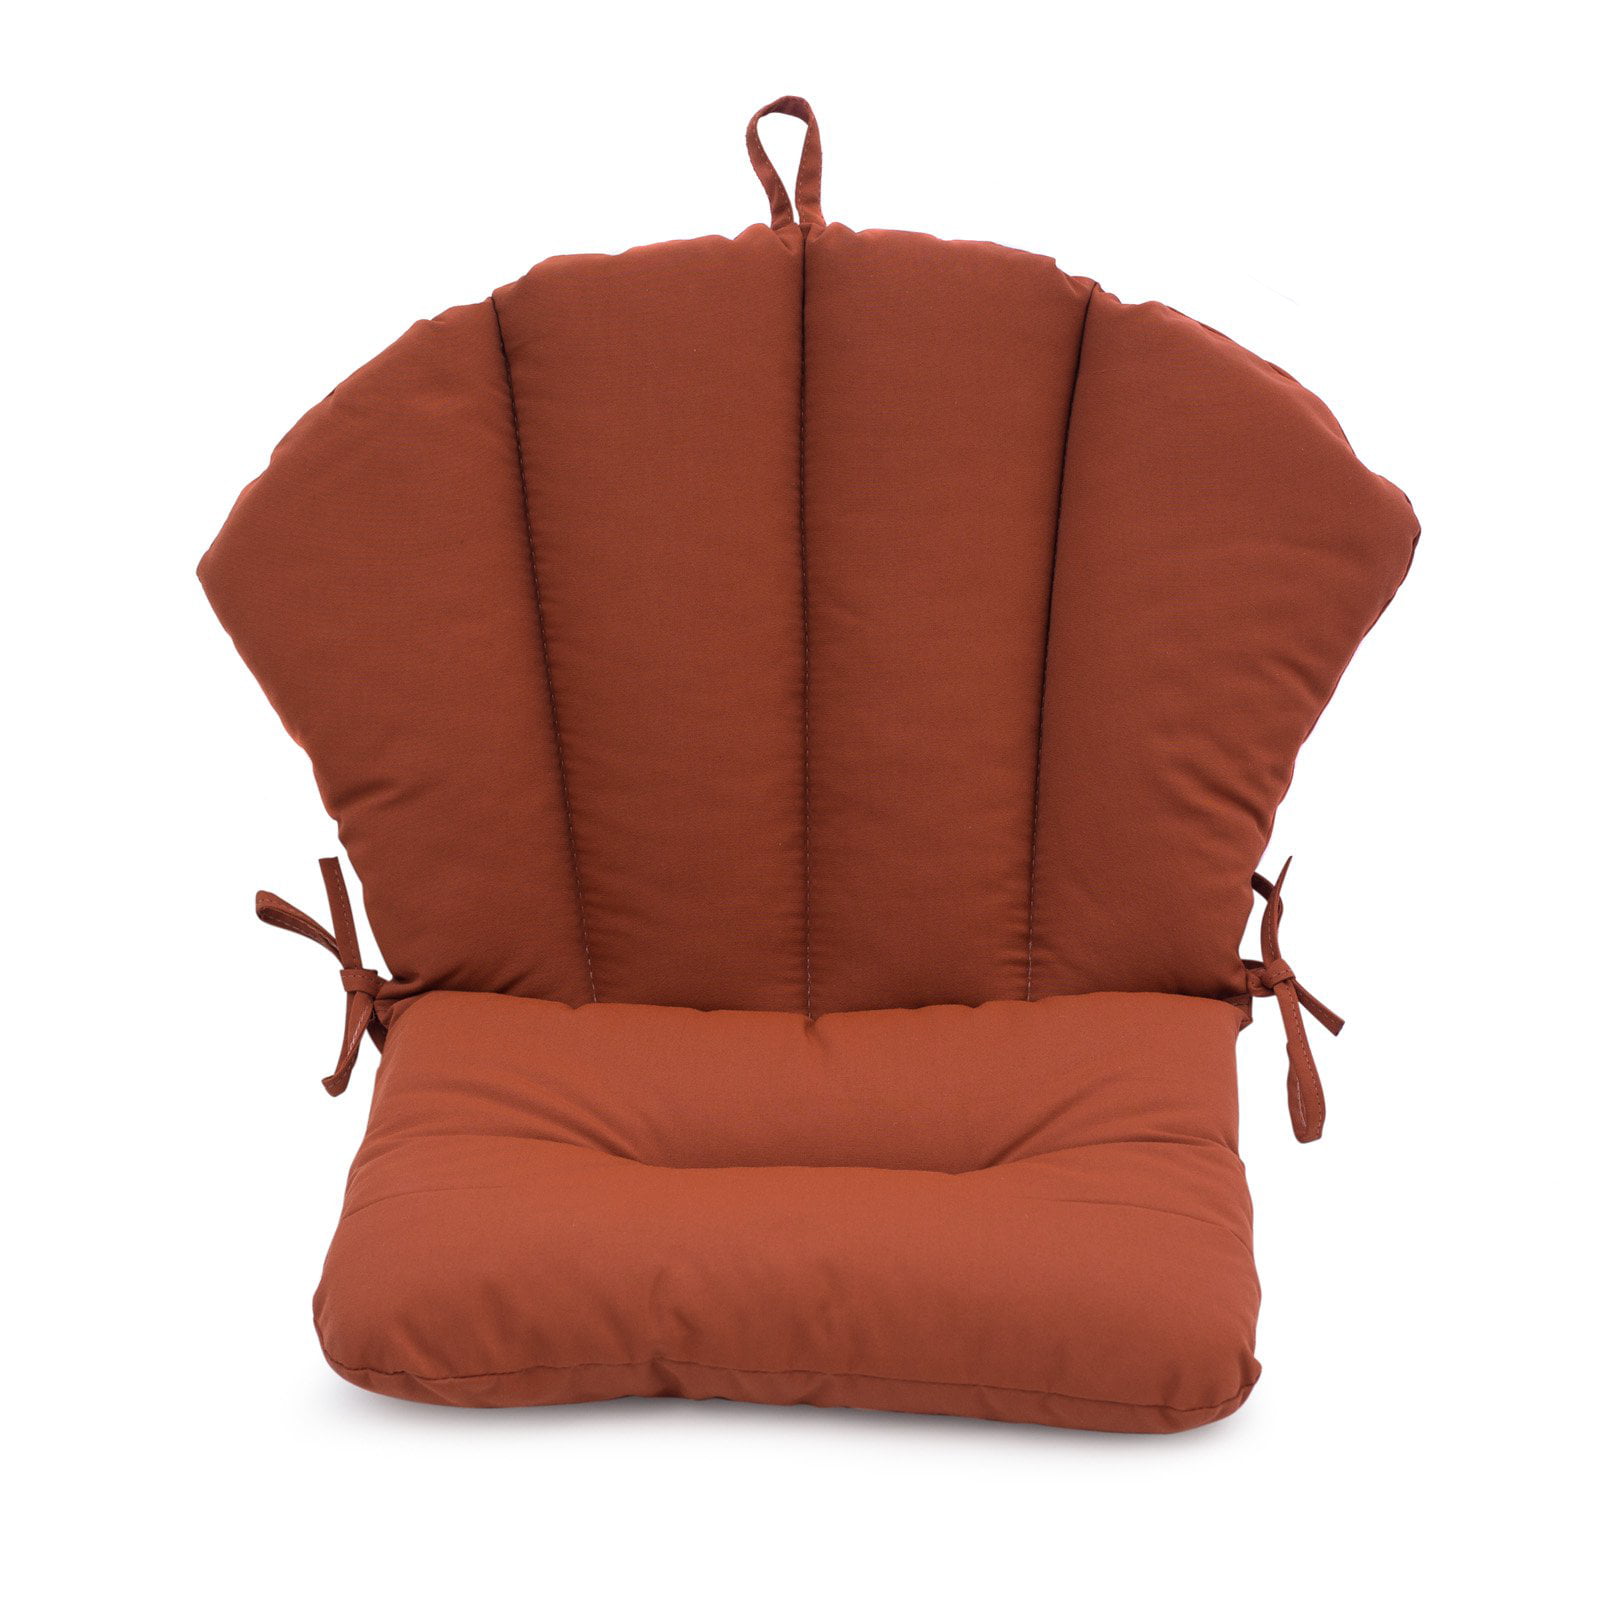 Coral Coast Cantara Barrel Back Chair Cushion - 30 x 18 in. - Walmart